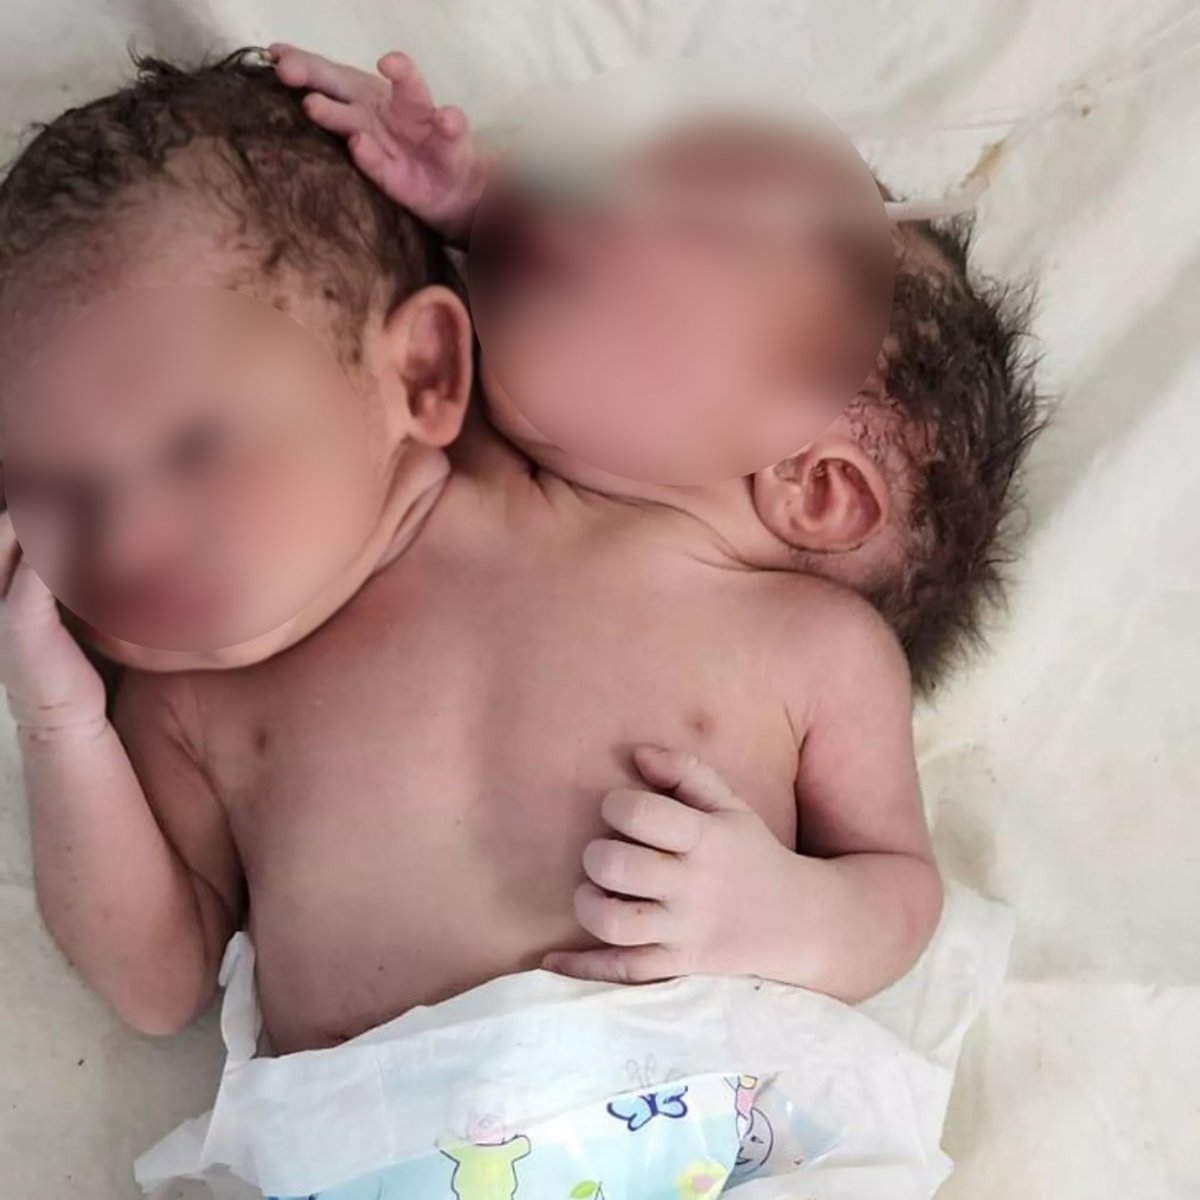 Double-headed baby born in India #1